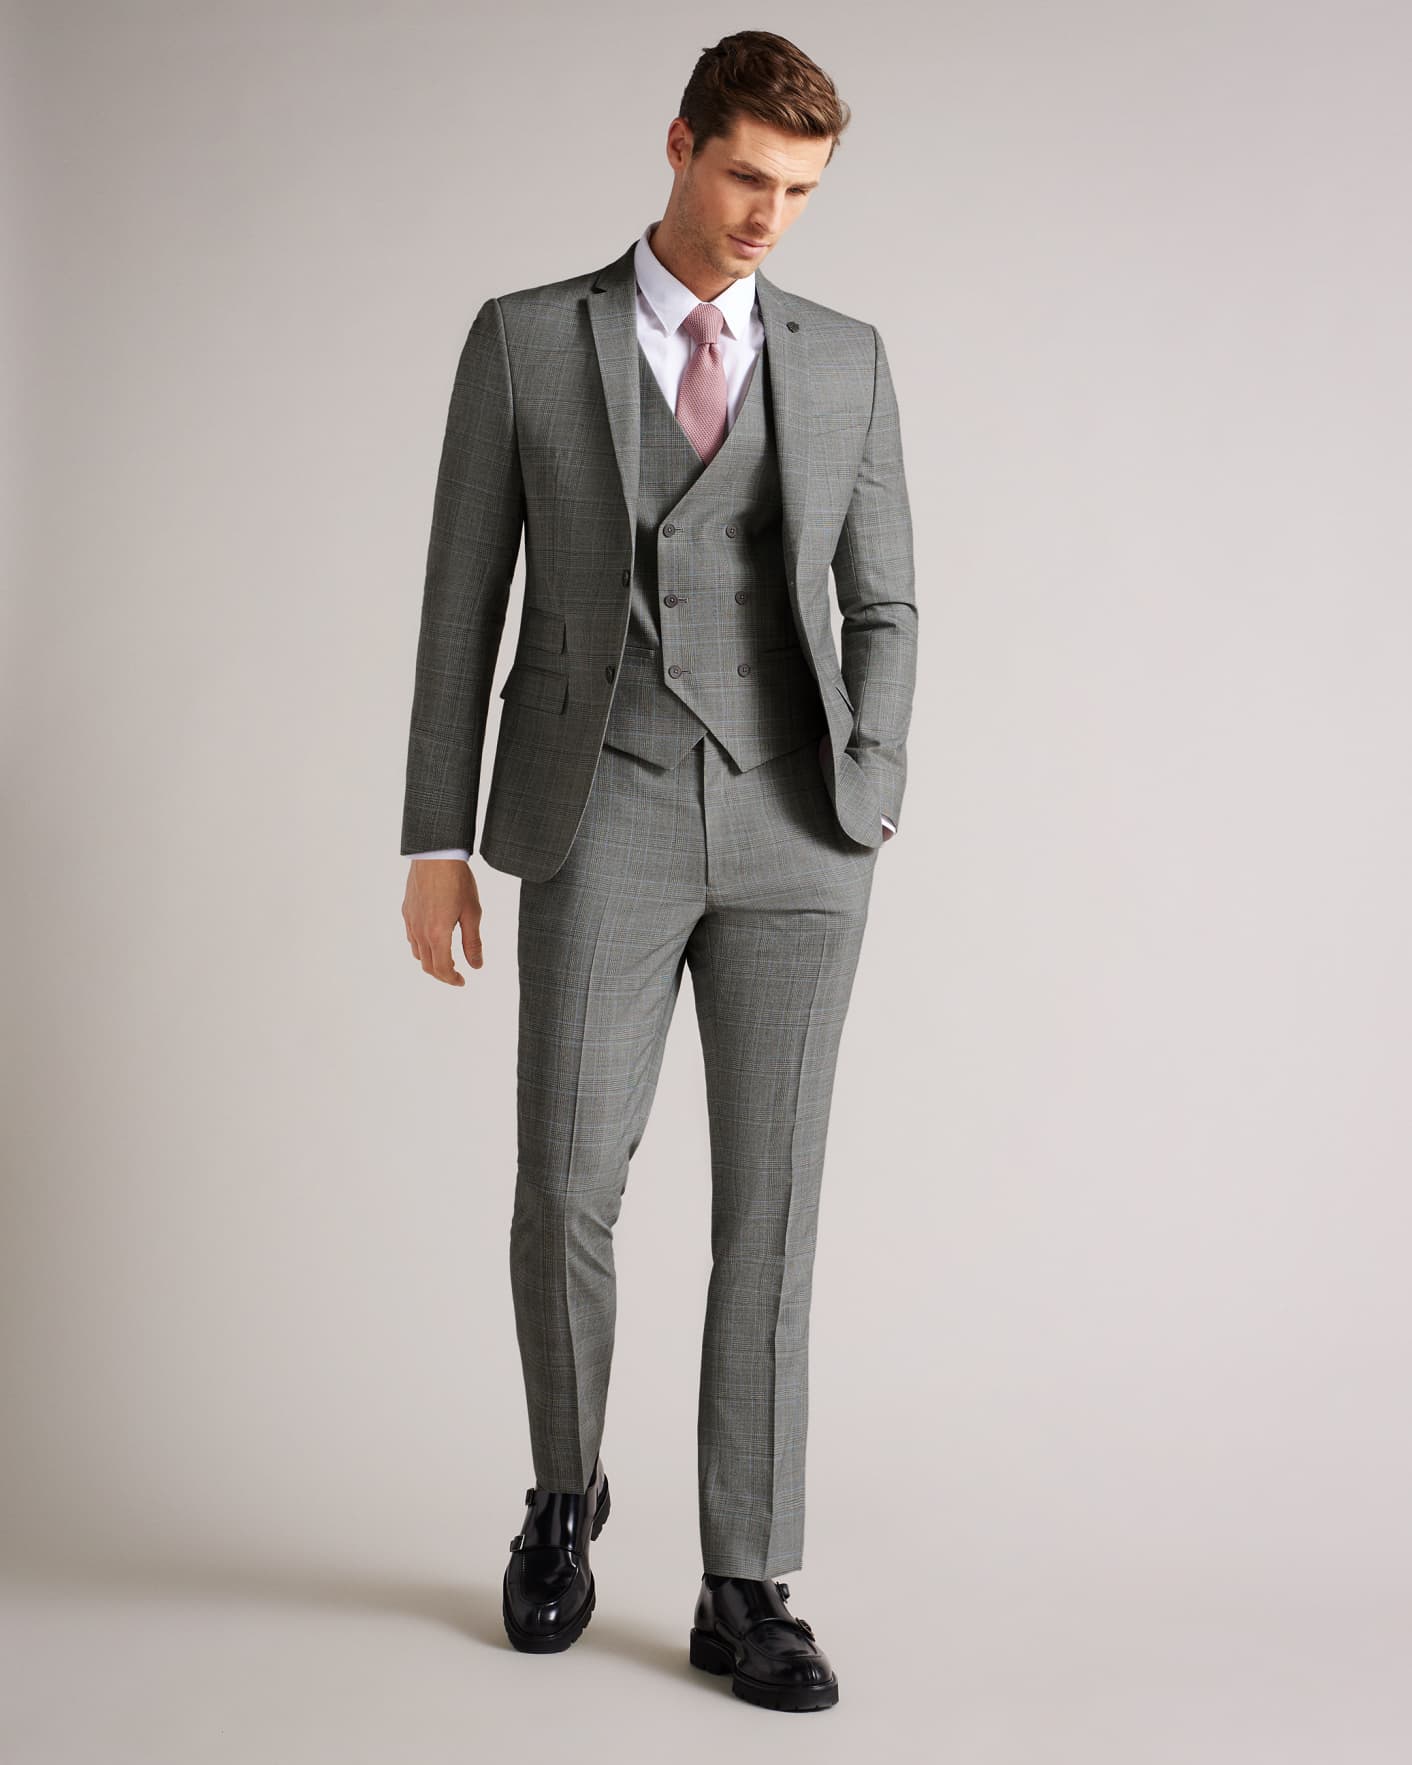 Medium Grey Slim Grey Blue Check Suit Trousers Ted Baker